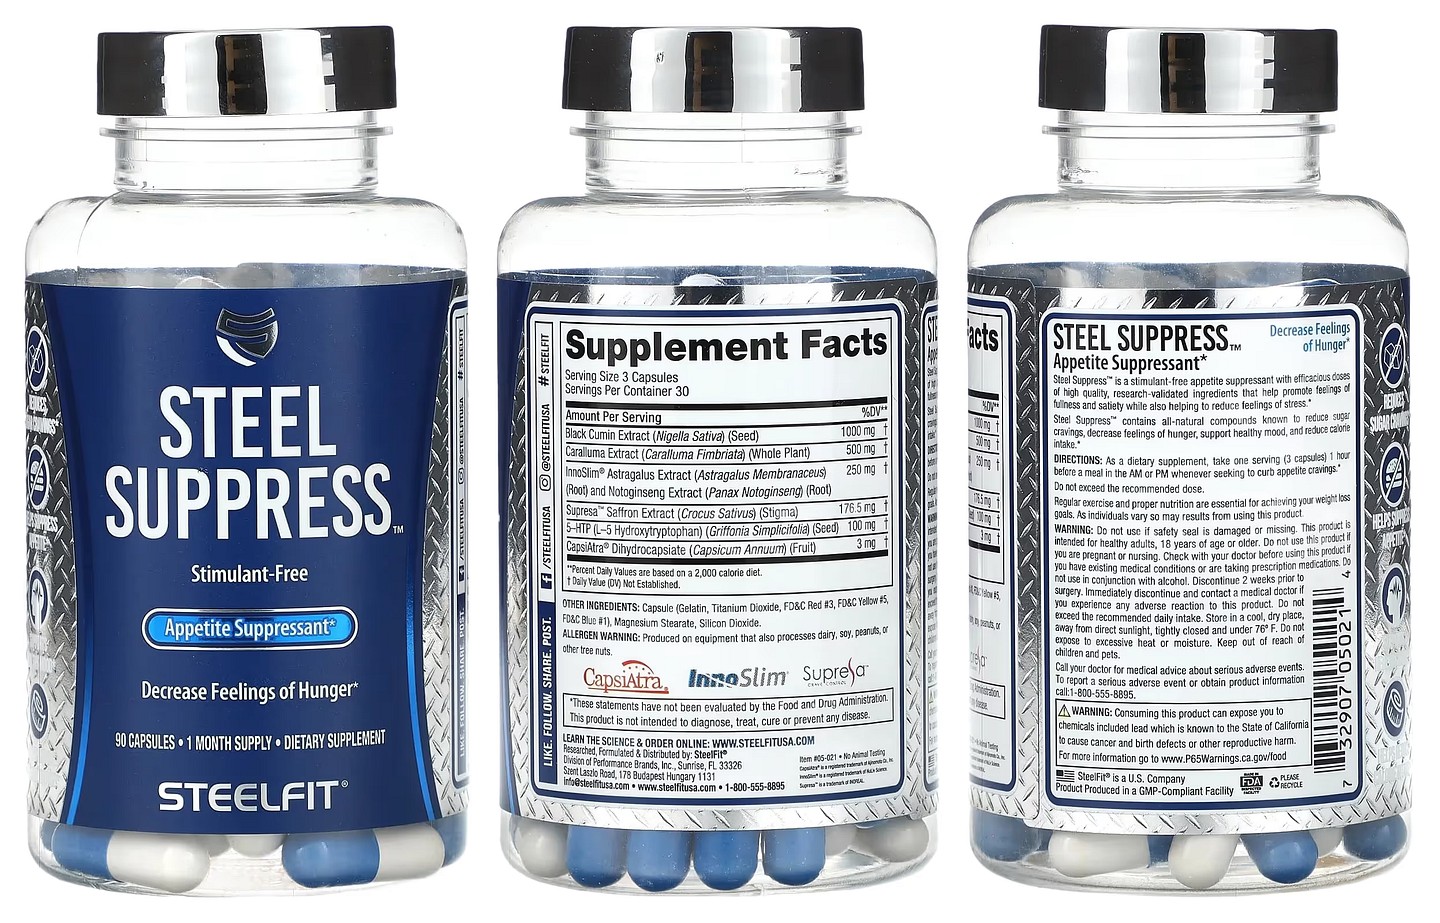 SteelFit, Steel Suppress packaging